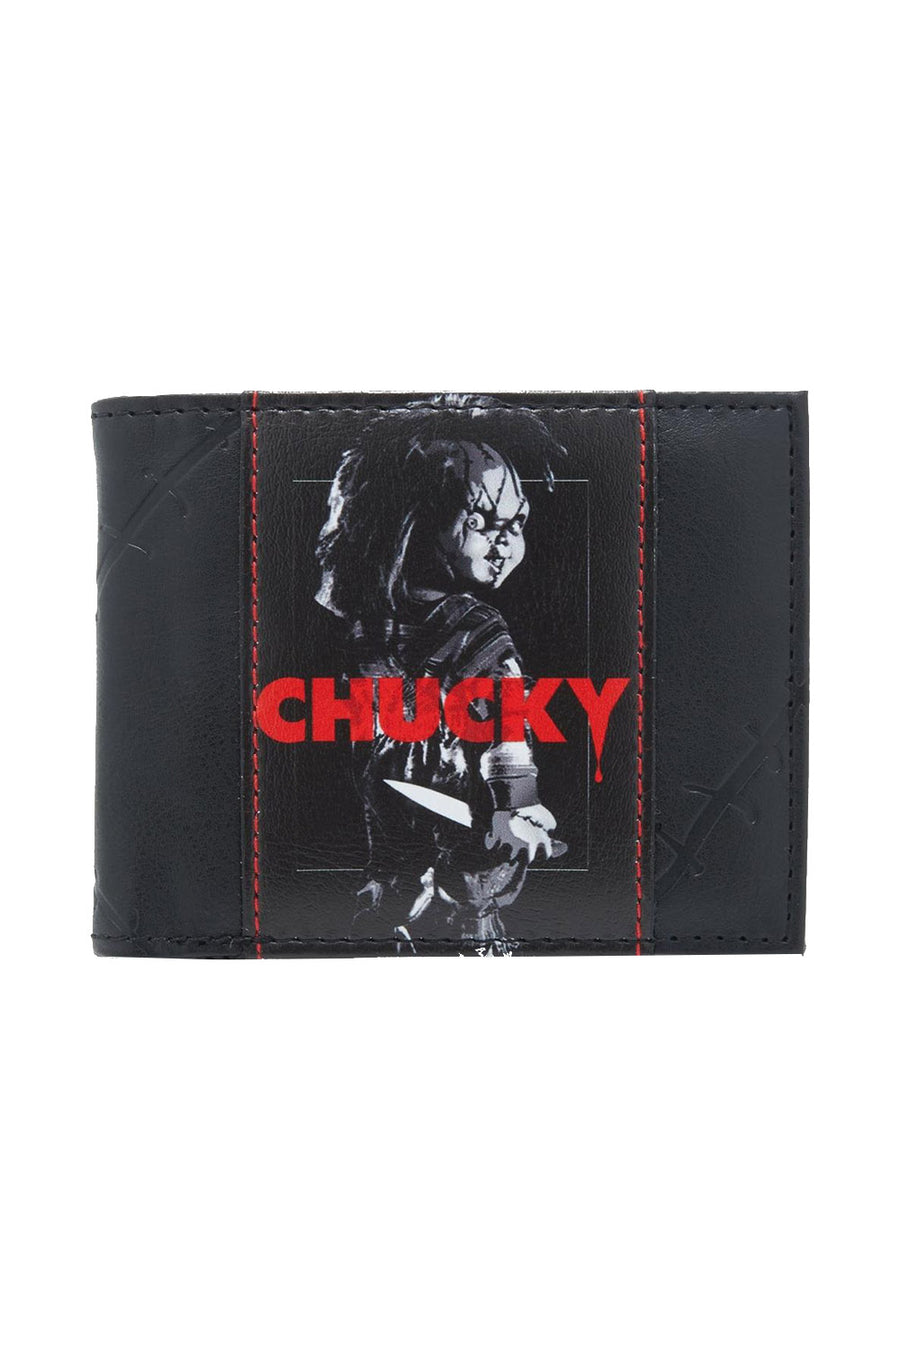 chucky movie wallet